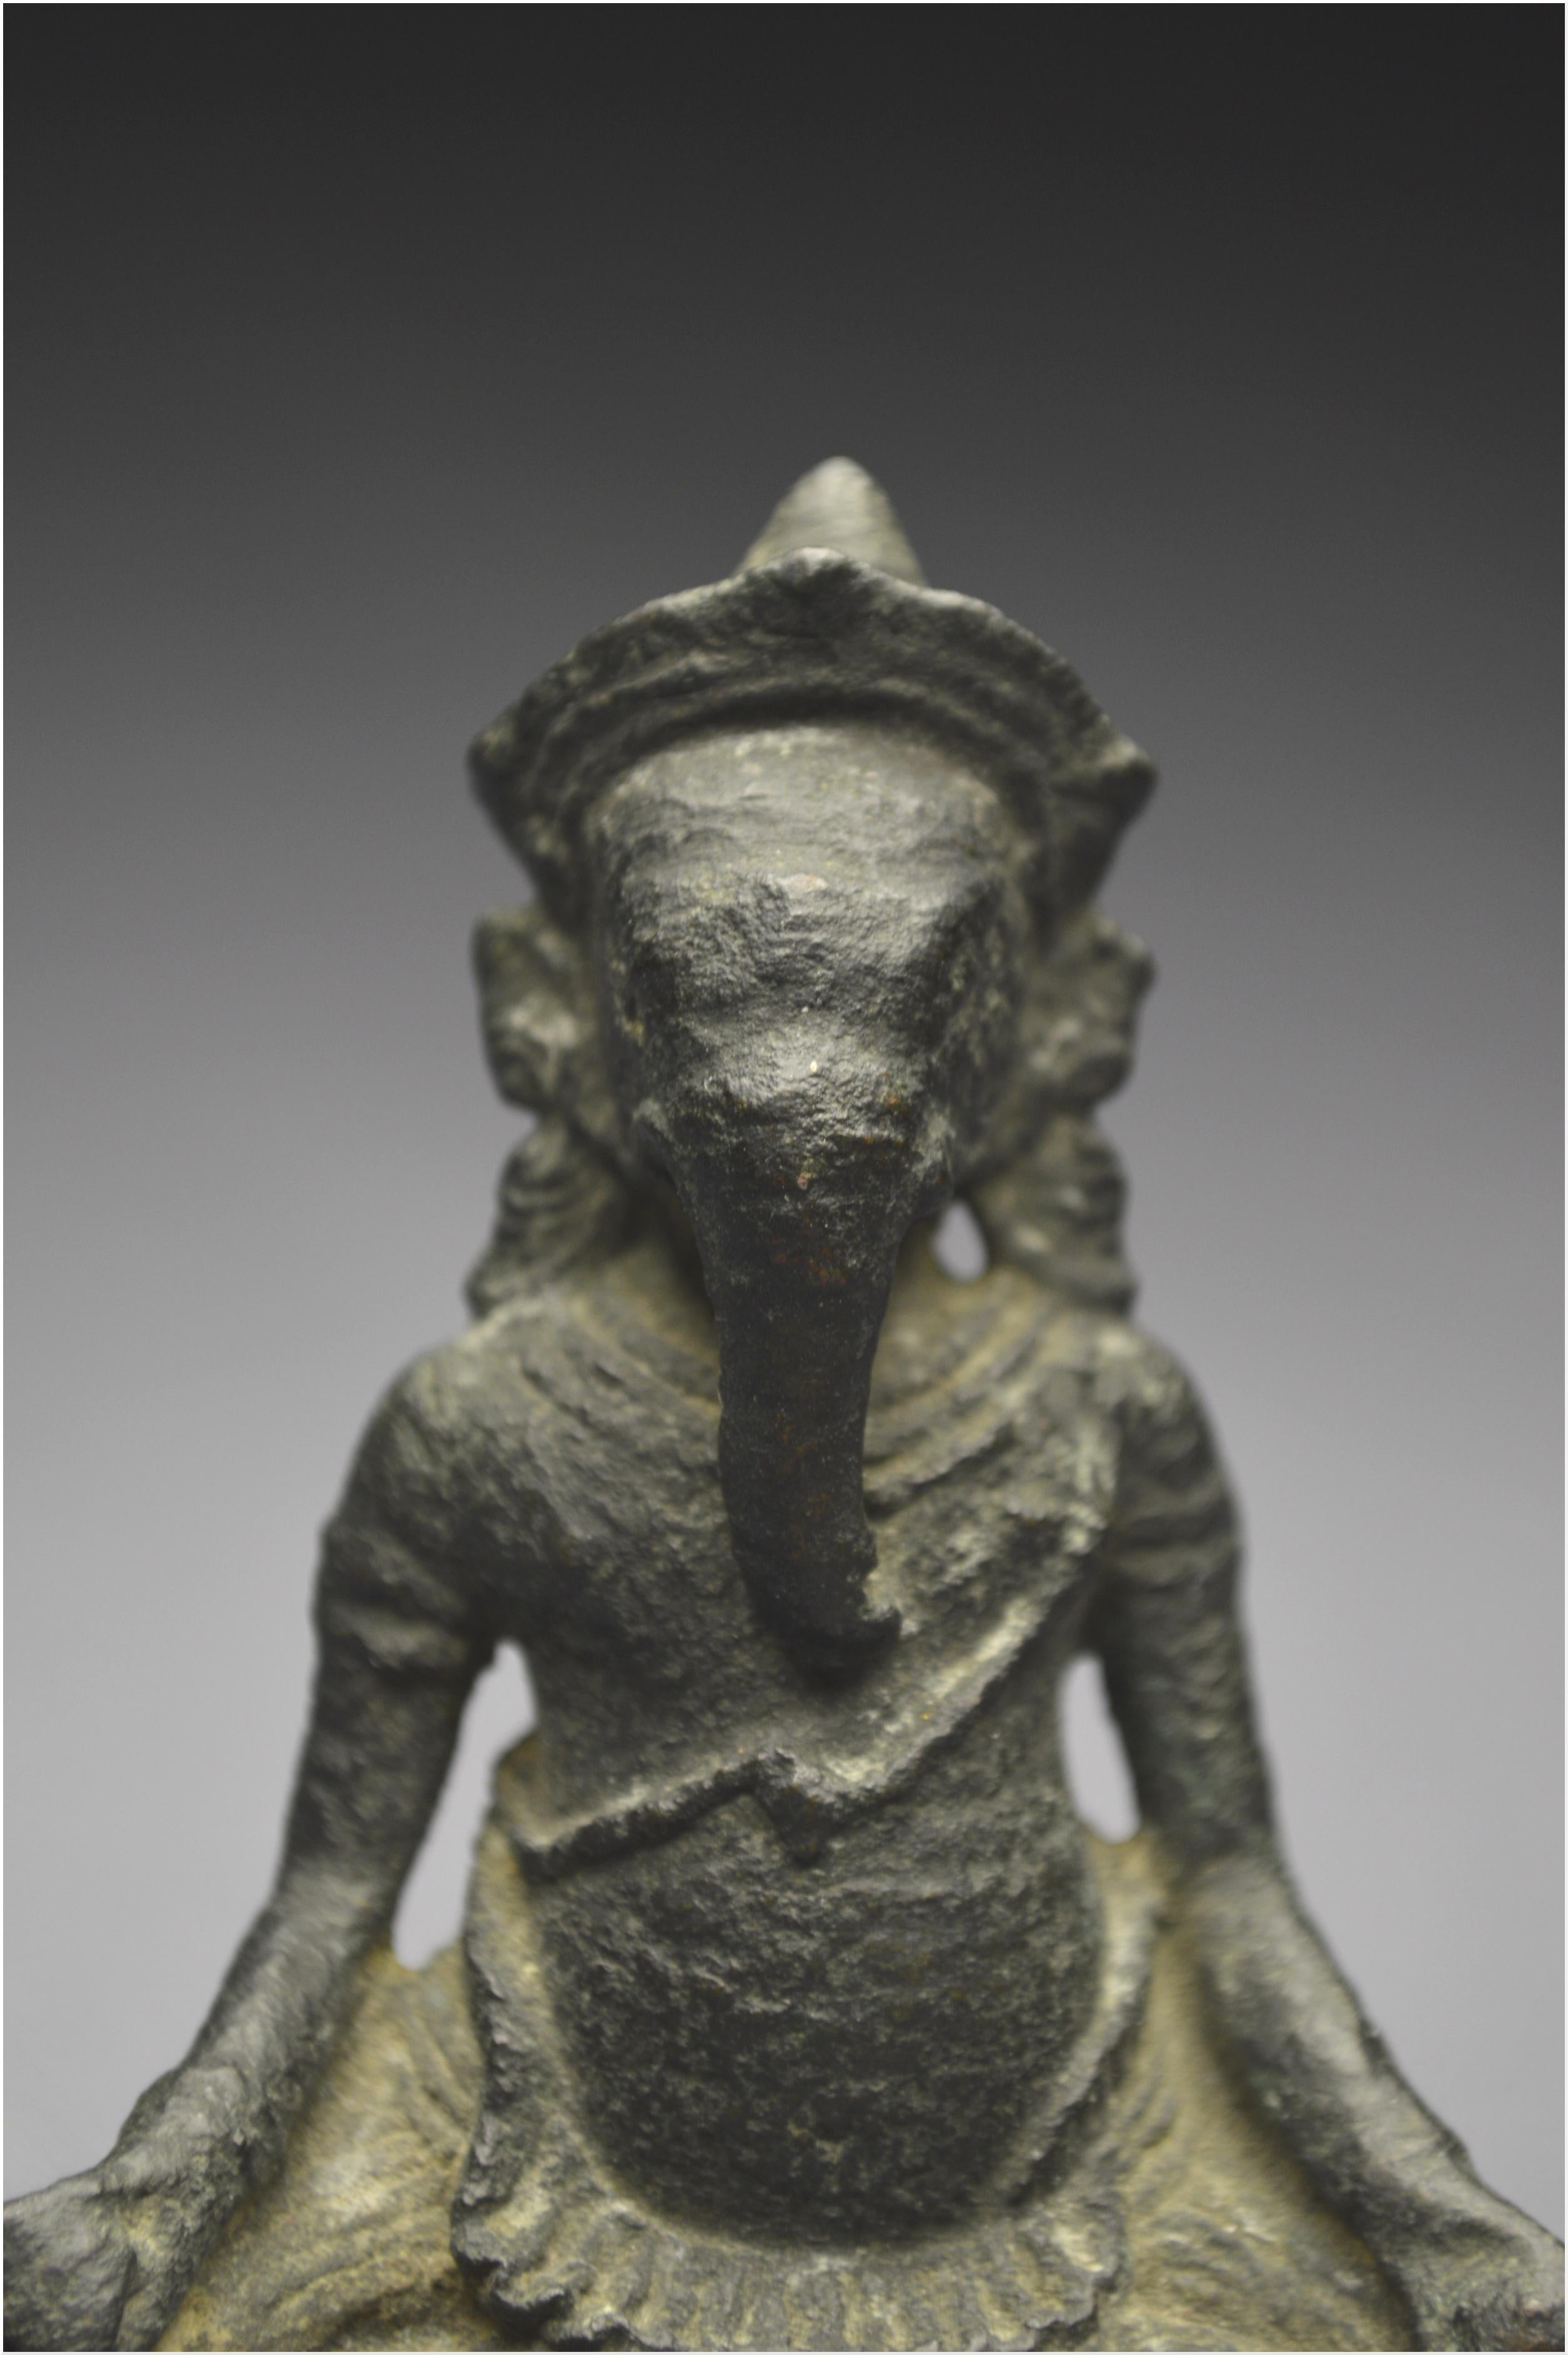 Cambodia, 11th Century, Angkor Vat period, Little bronze statuette of Ganesha 6